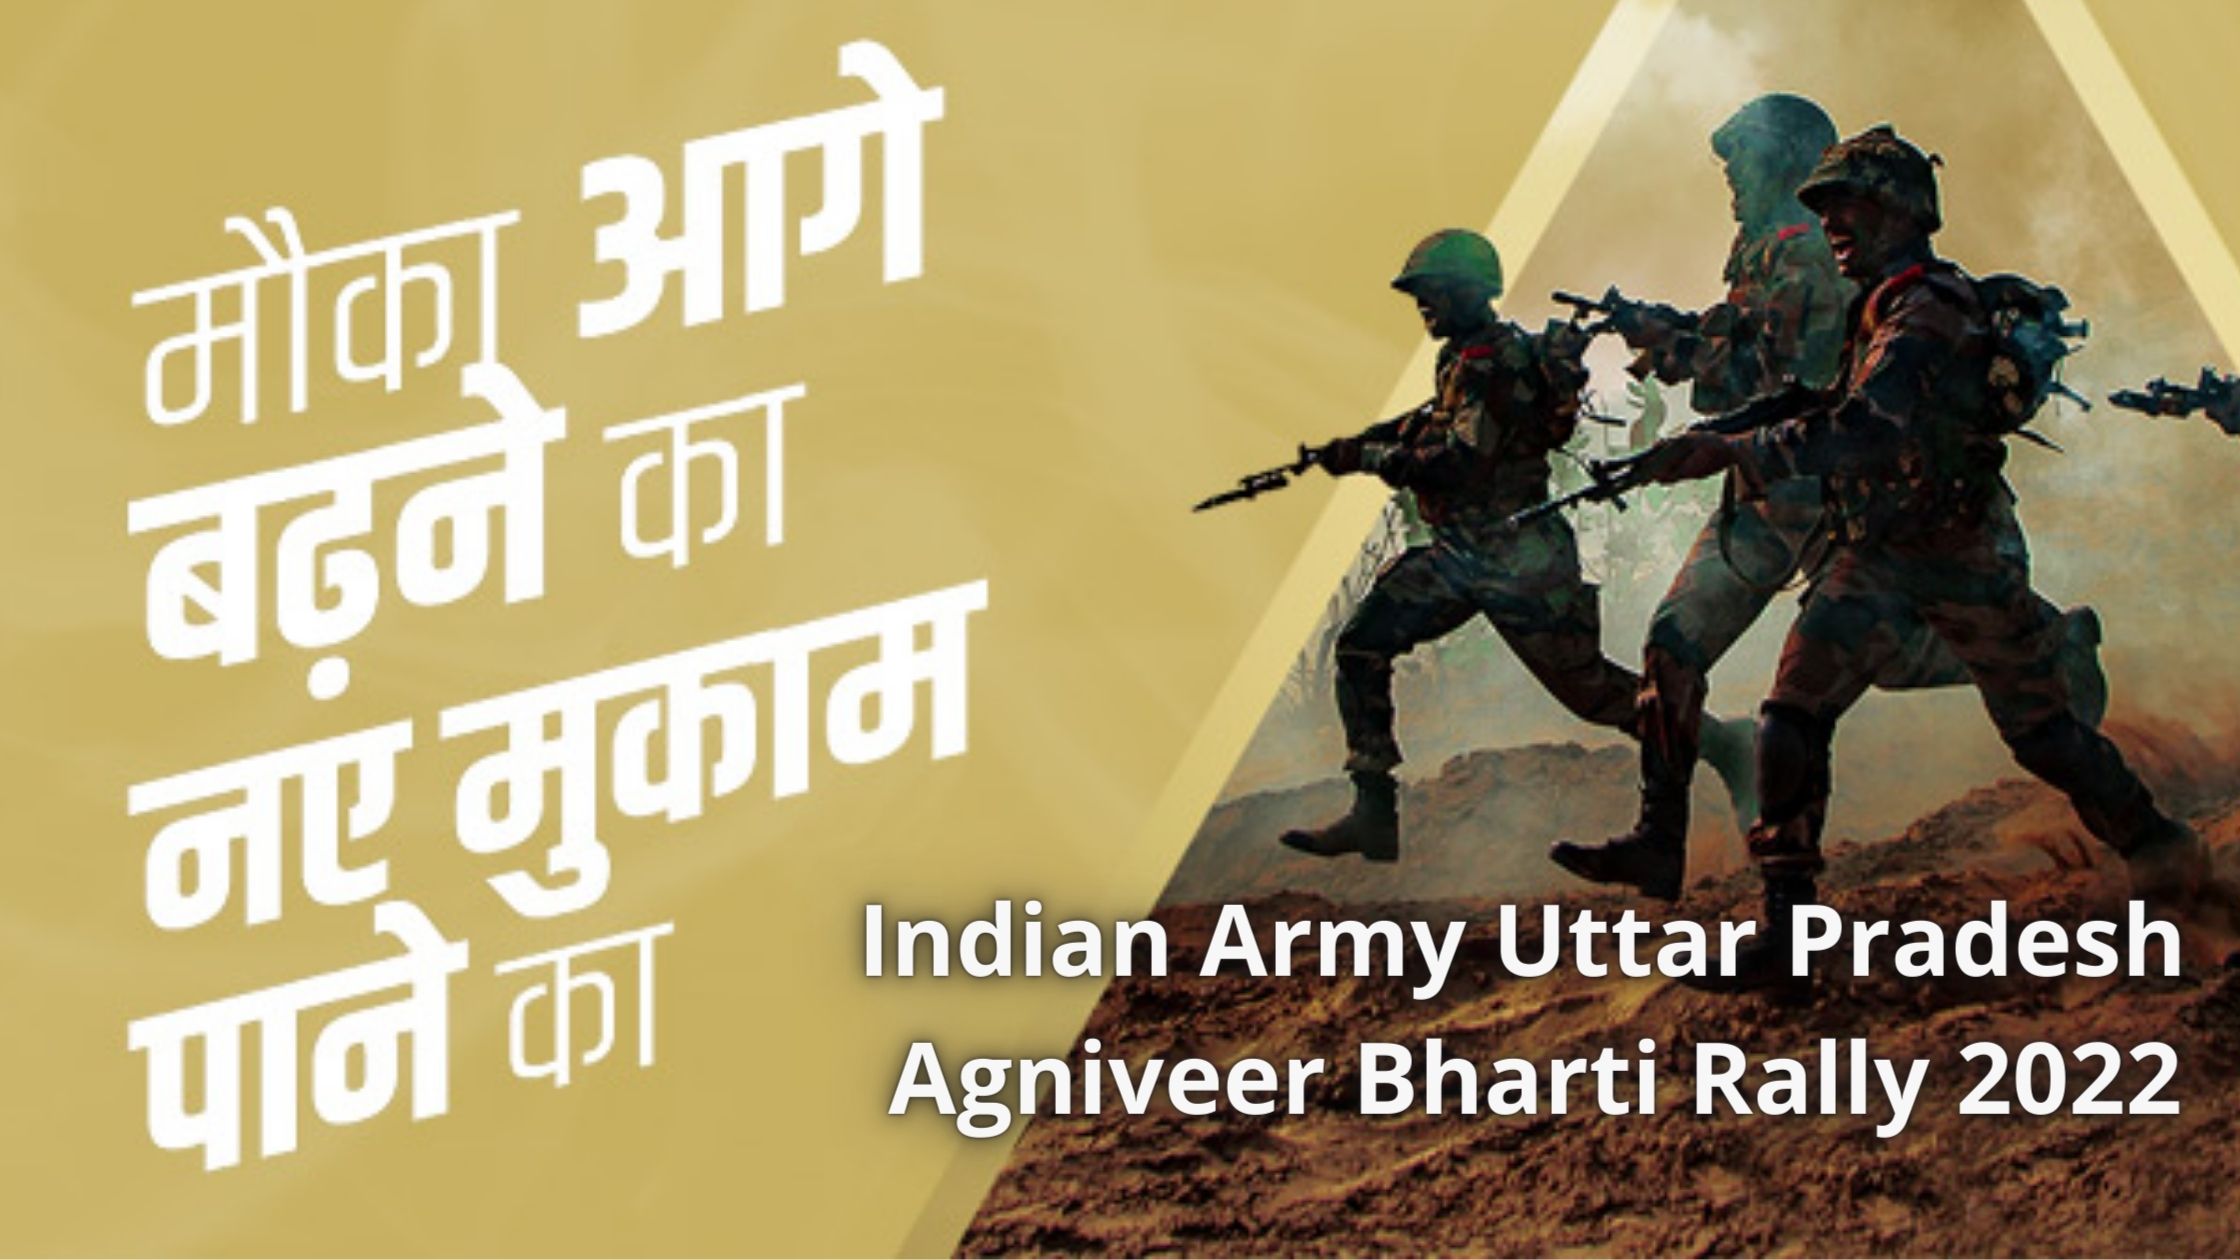 Indian Army Uttar Pradesh Agniveer Bharti Rally 2022